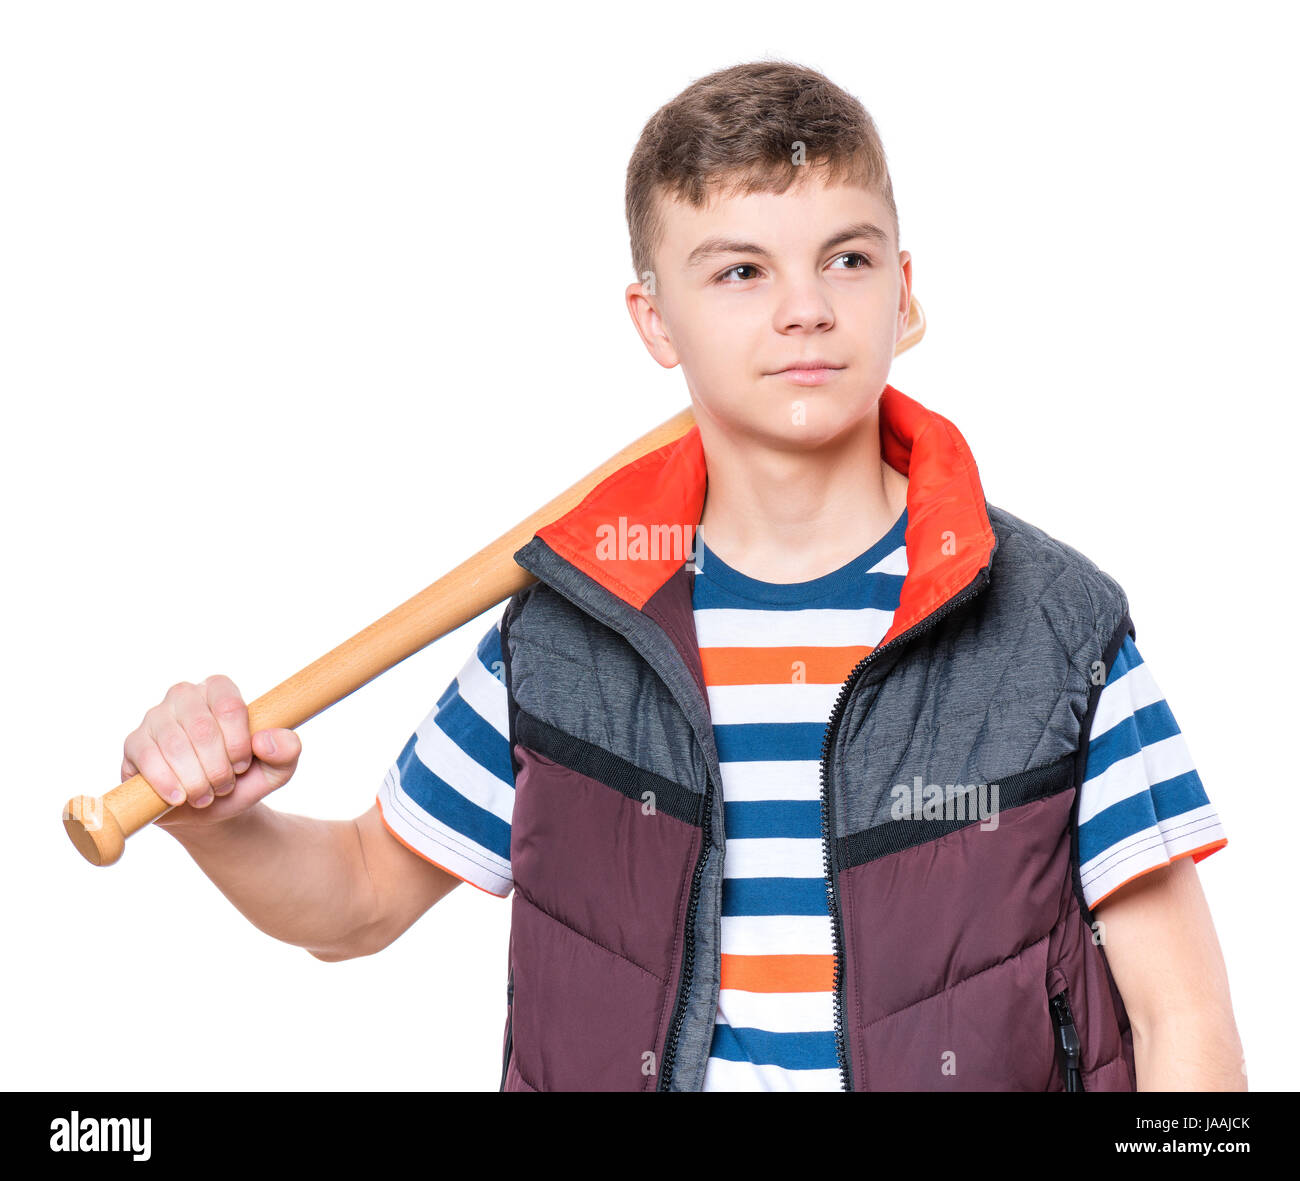 Teen boy with baseball bat Stock Photo